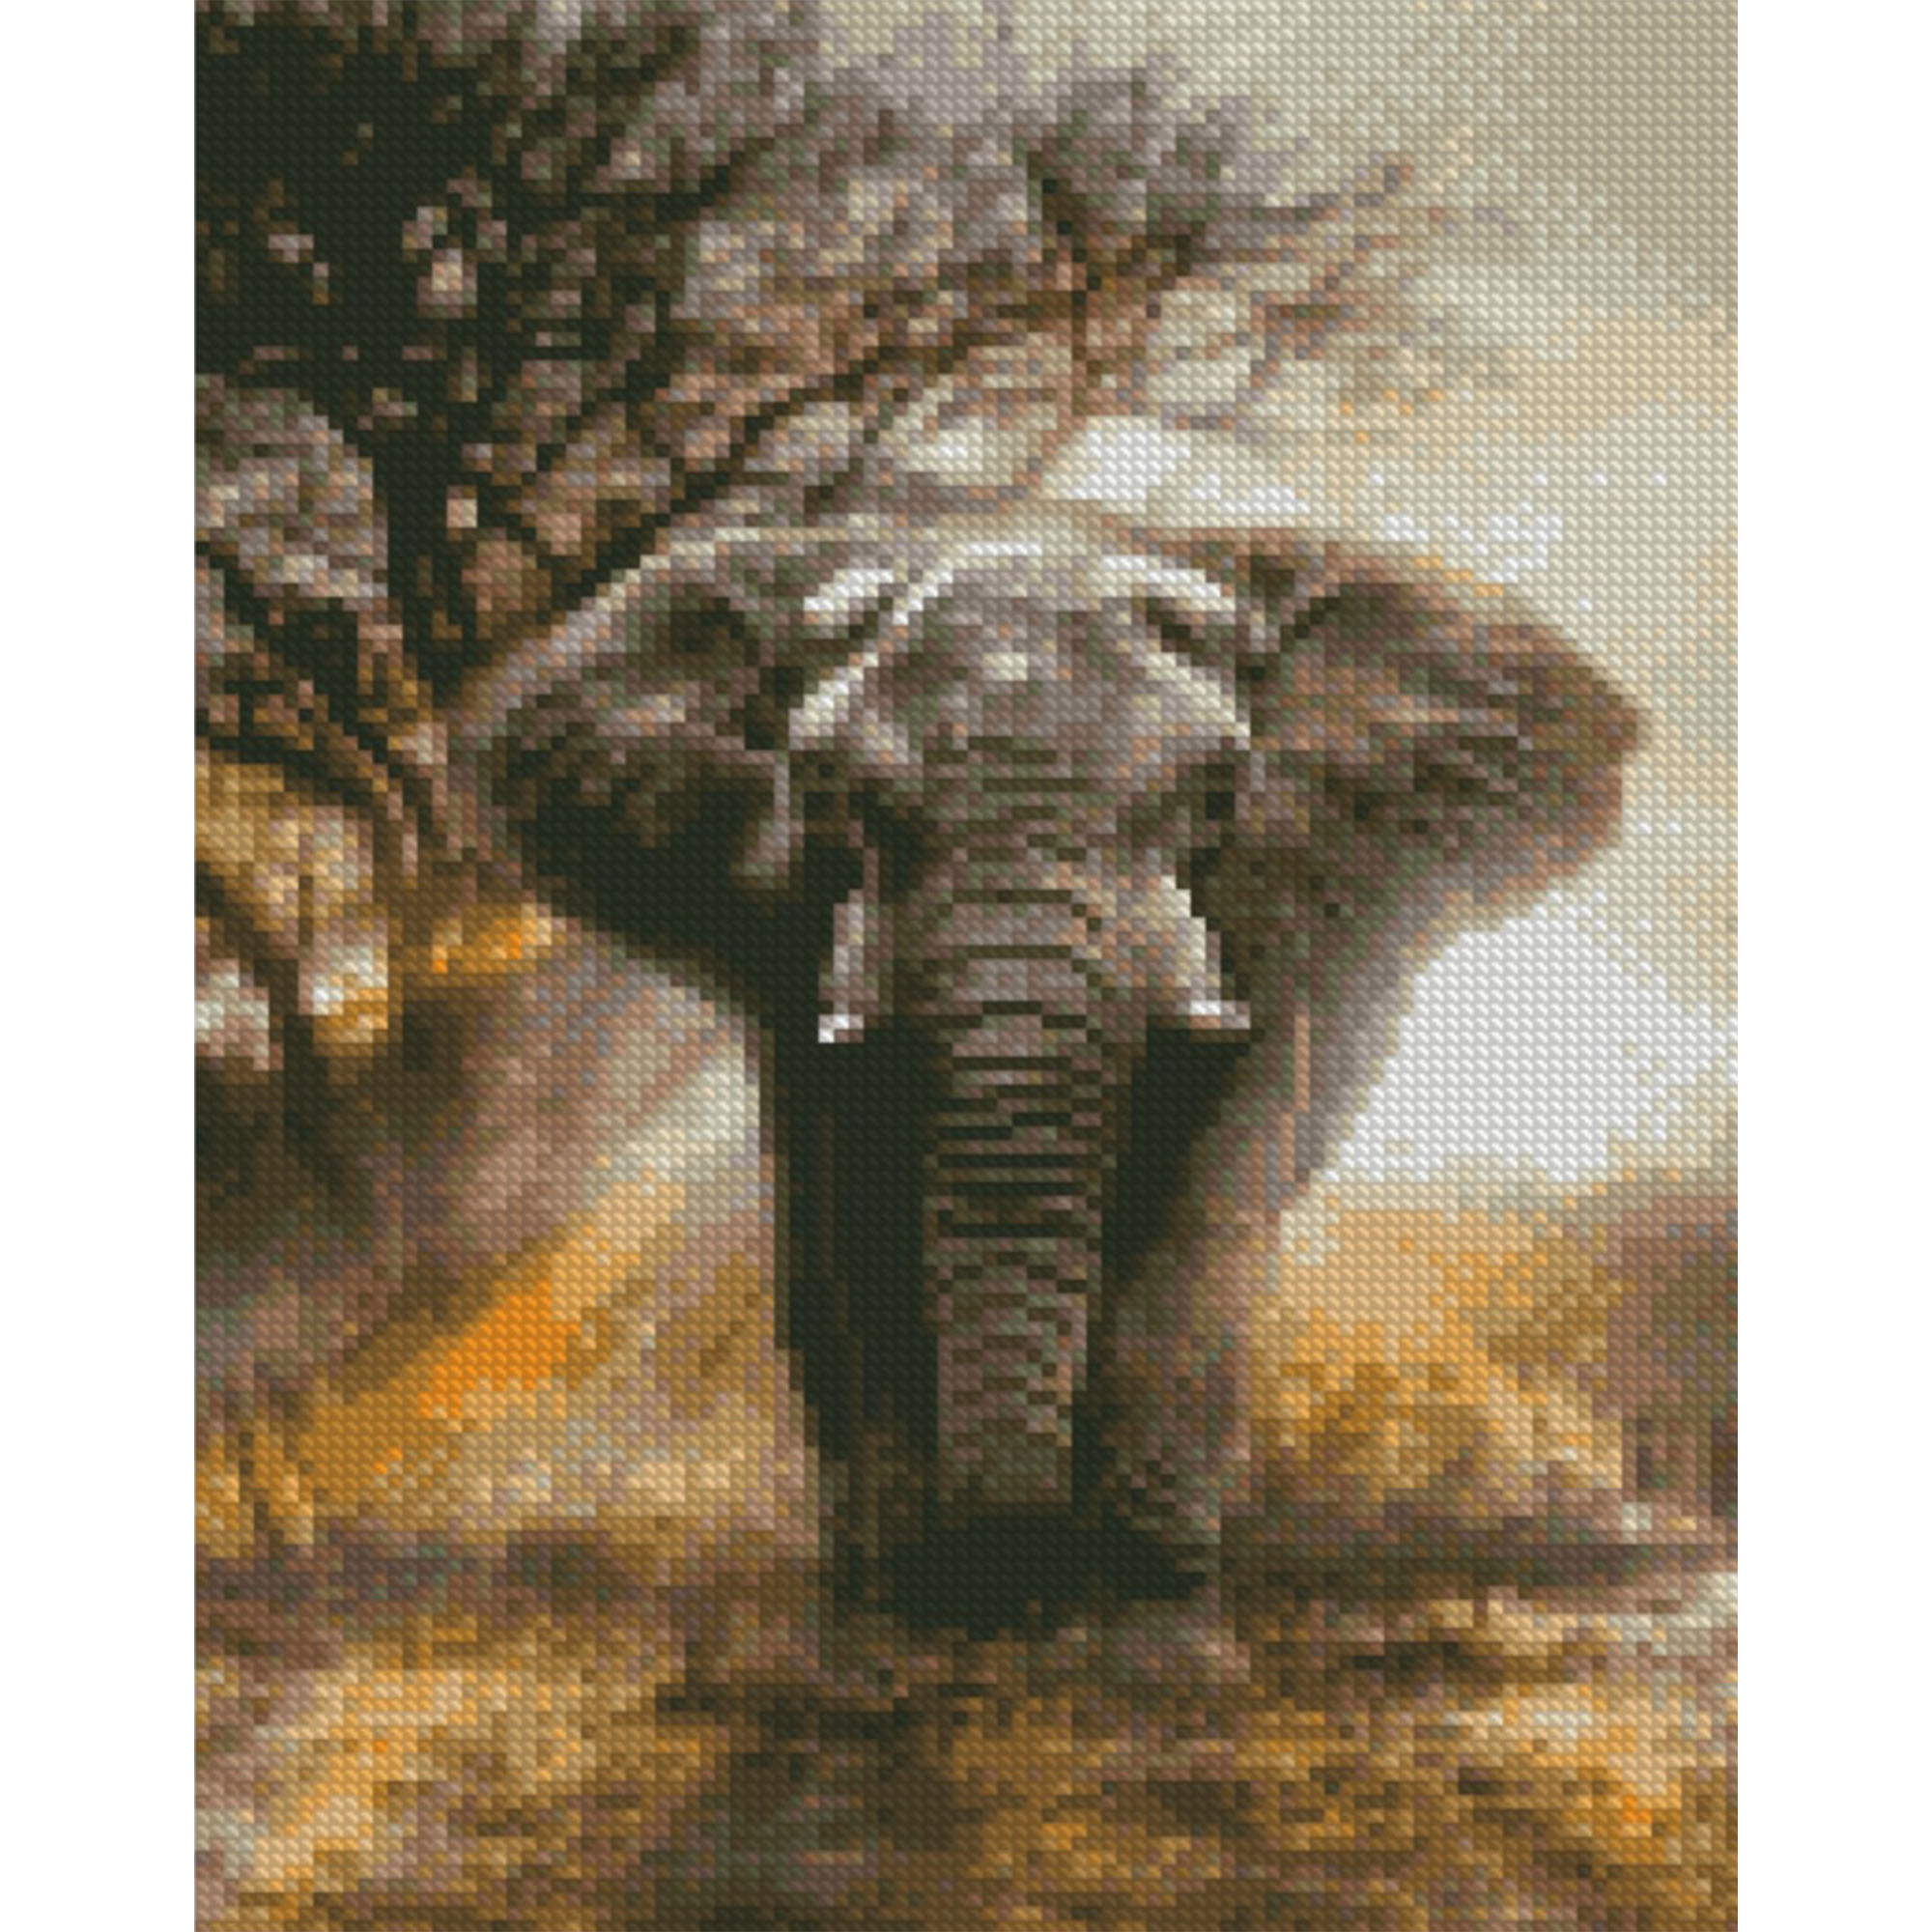 Diamond mosaic Premium "Mighty elephant", 30x40 cm